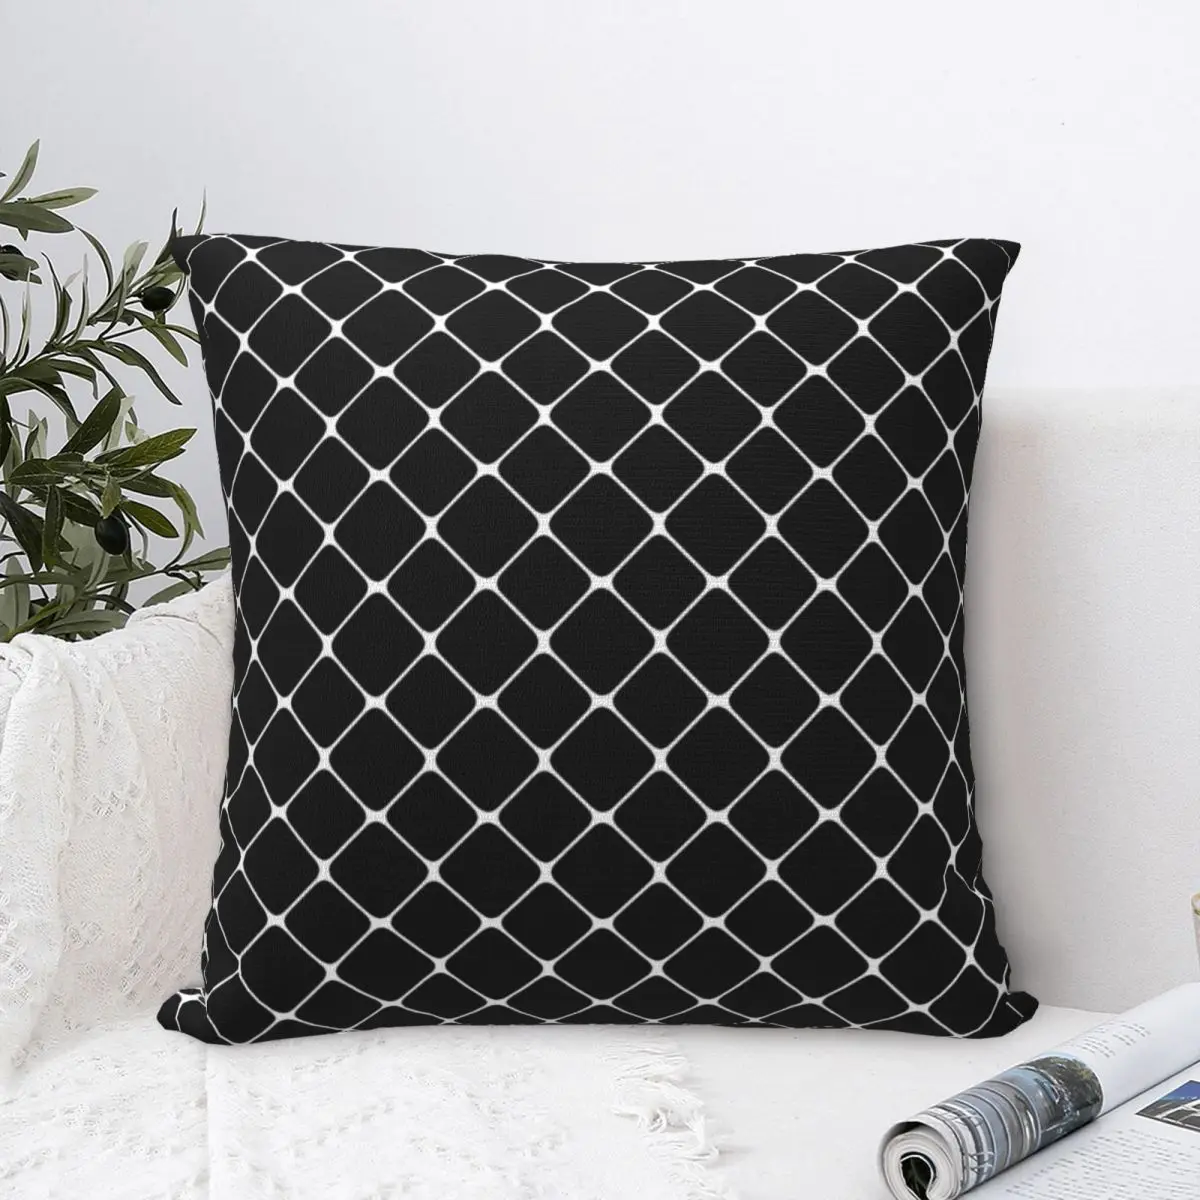 

Pillow Cover Rhombus Grid Printed Cushion Cover Black Kawaii Pillow Case For Sofa Bedroom Home Decor Pillowcases